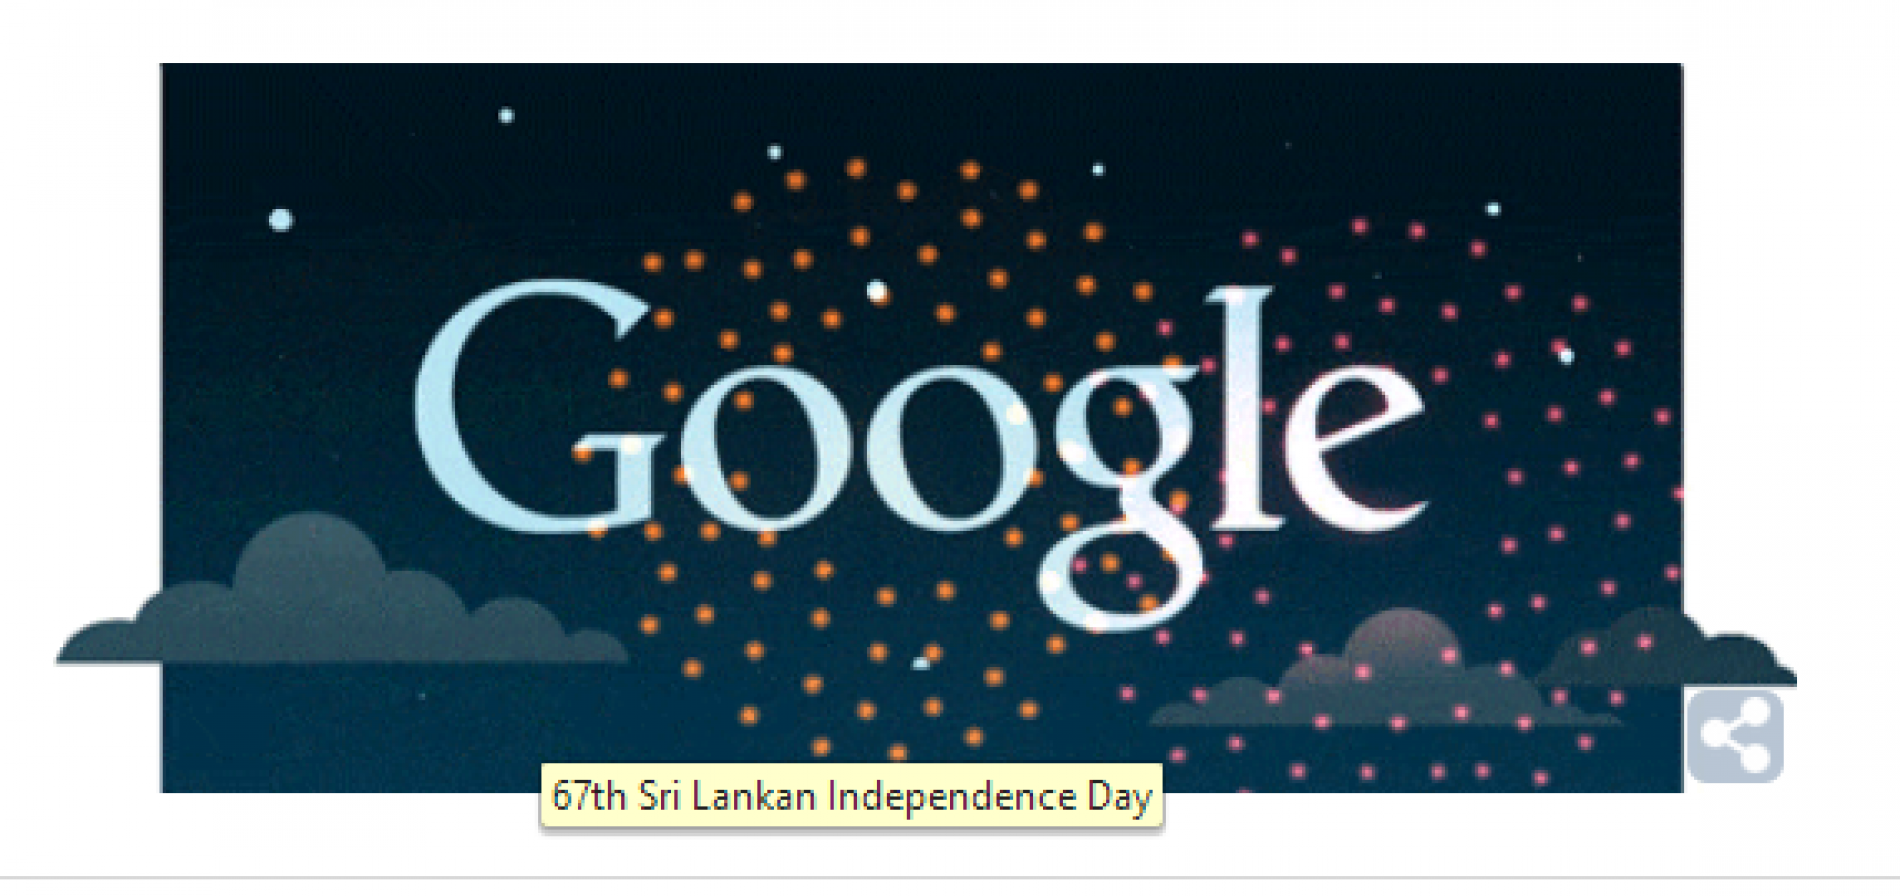 Happy Independence Day Sri Lanka